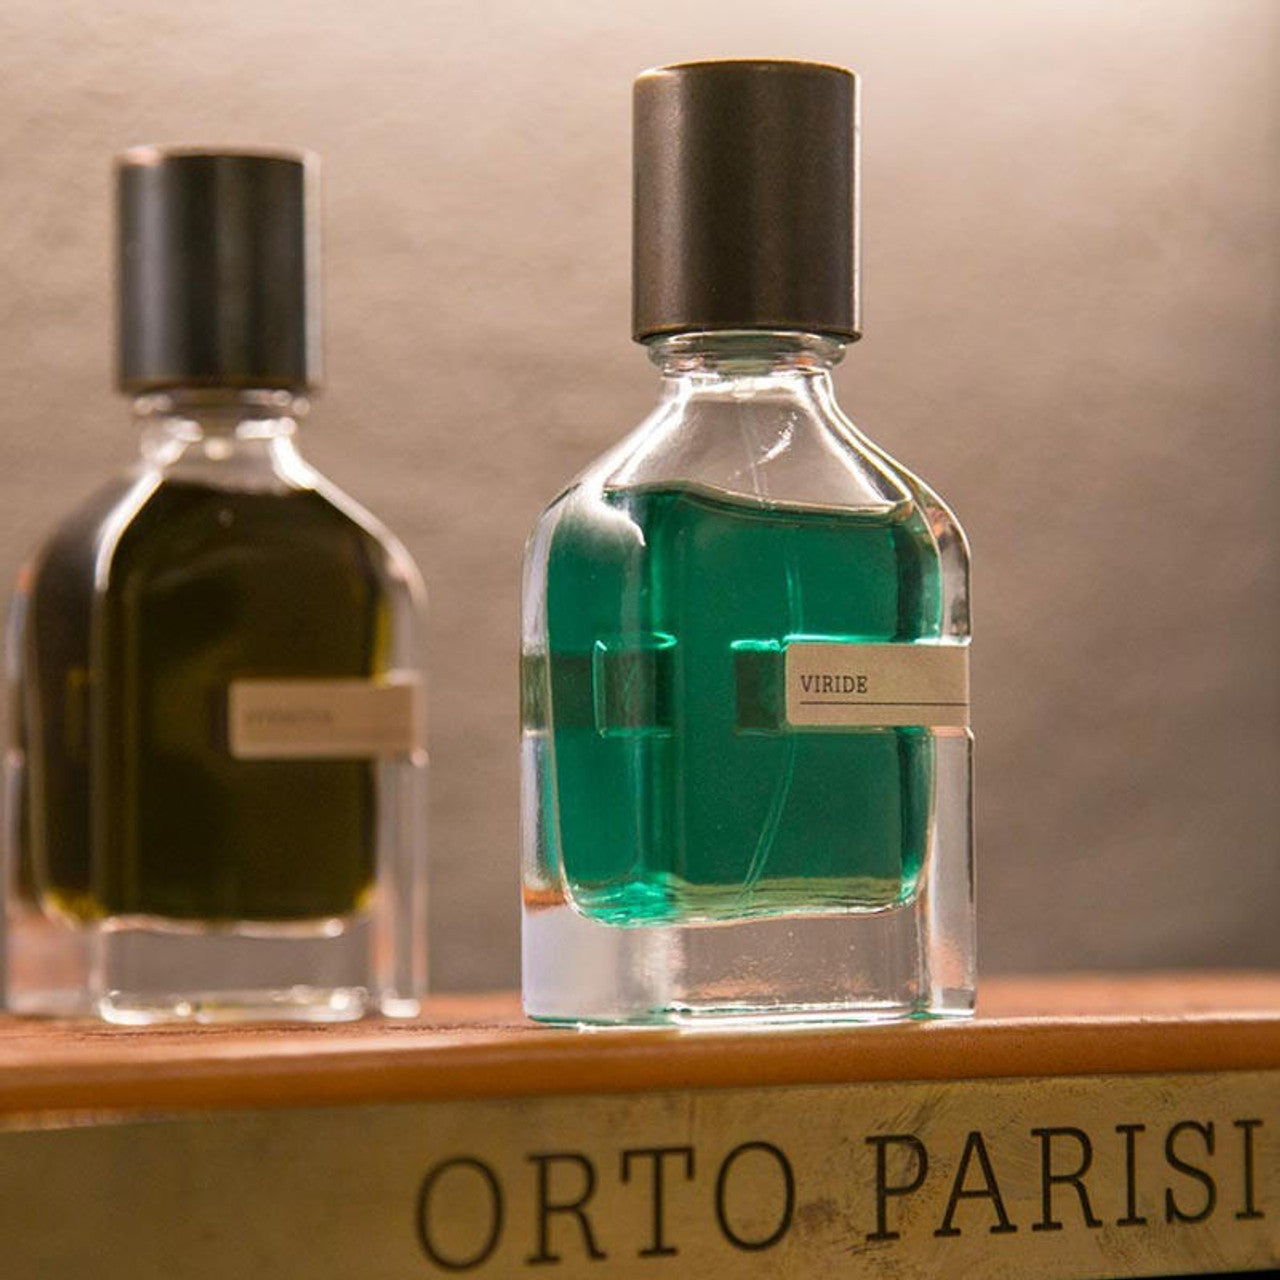 ORTO PARISI VIRIDE Eau De Parfum 50 ML